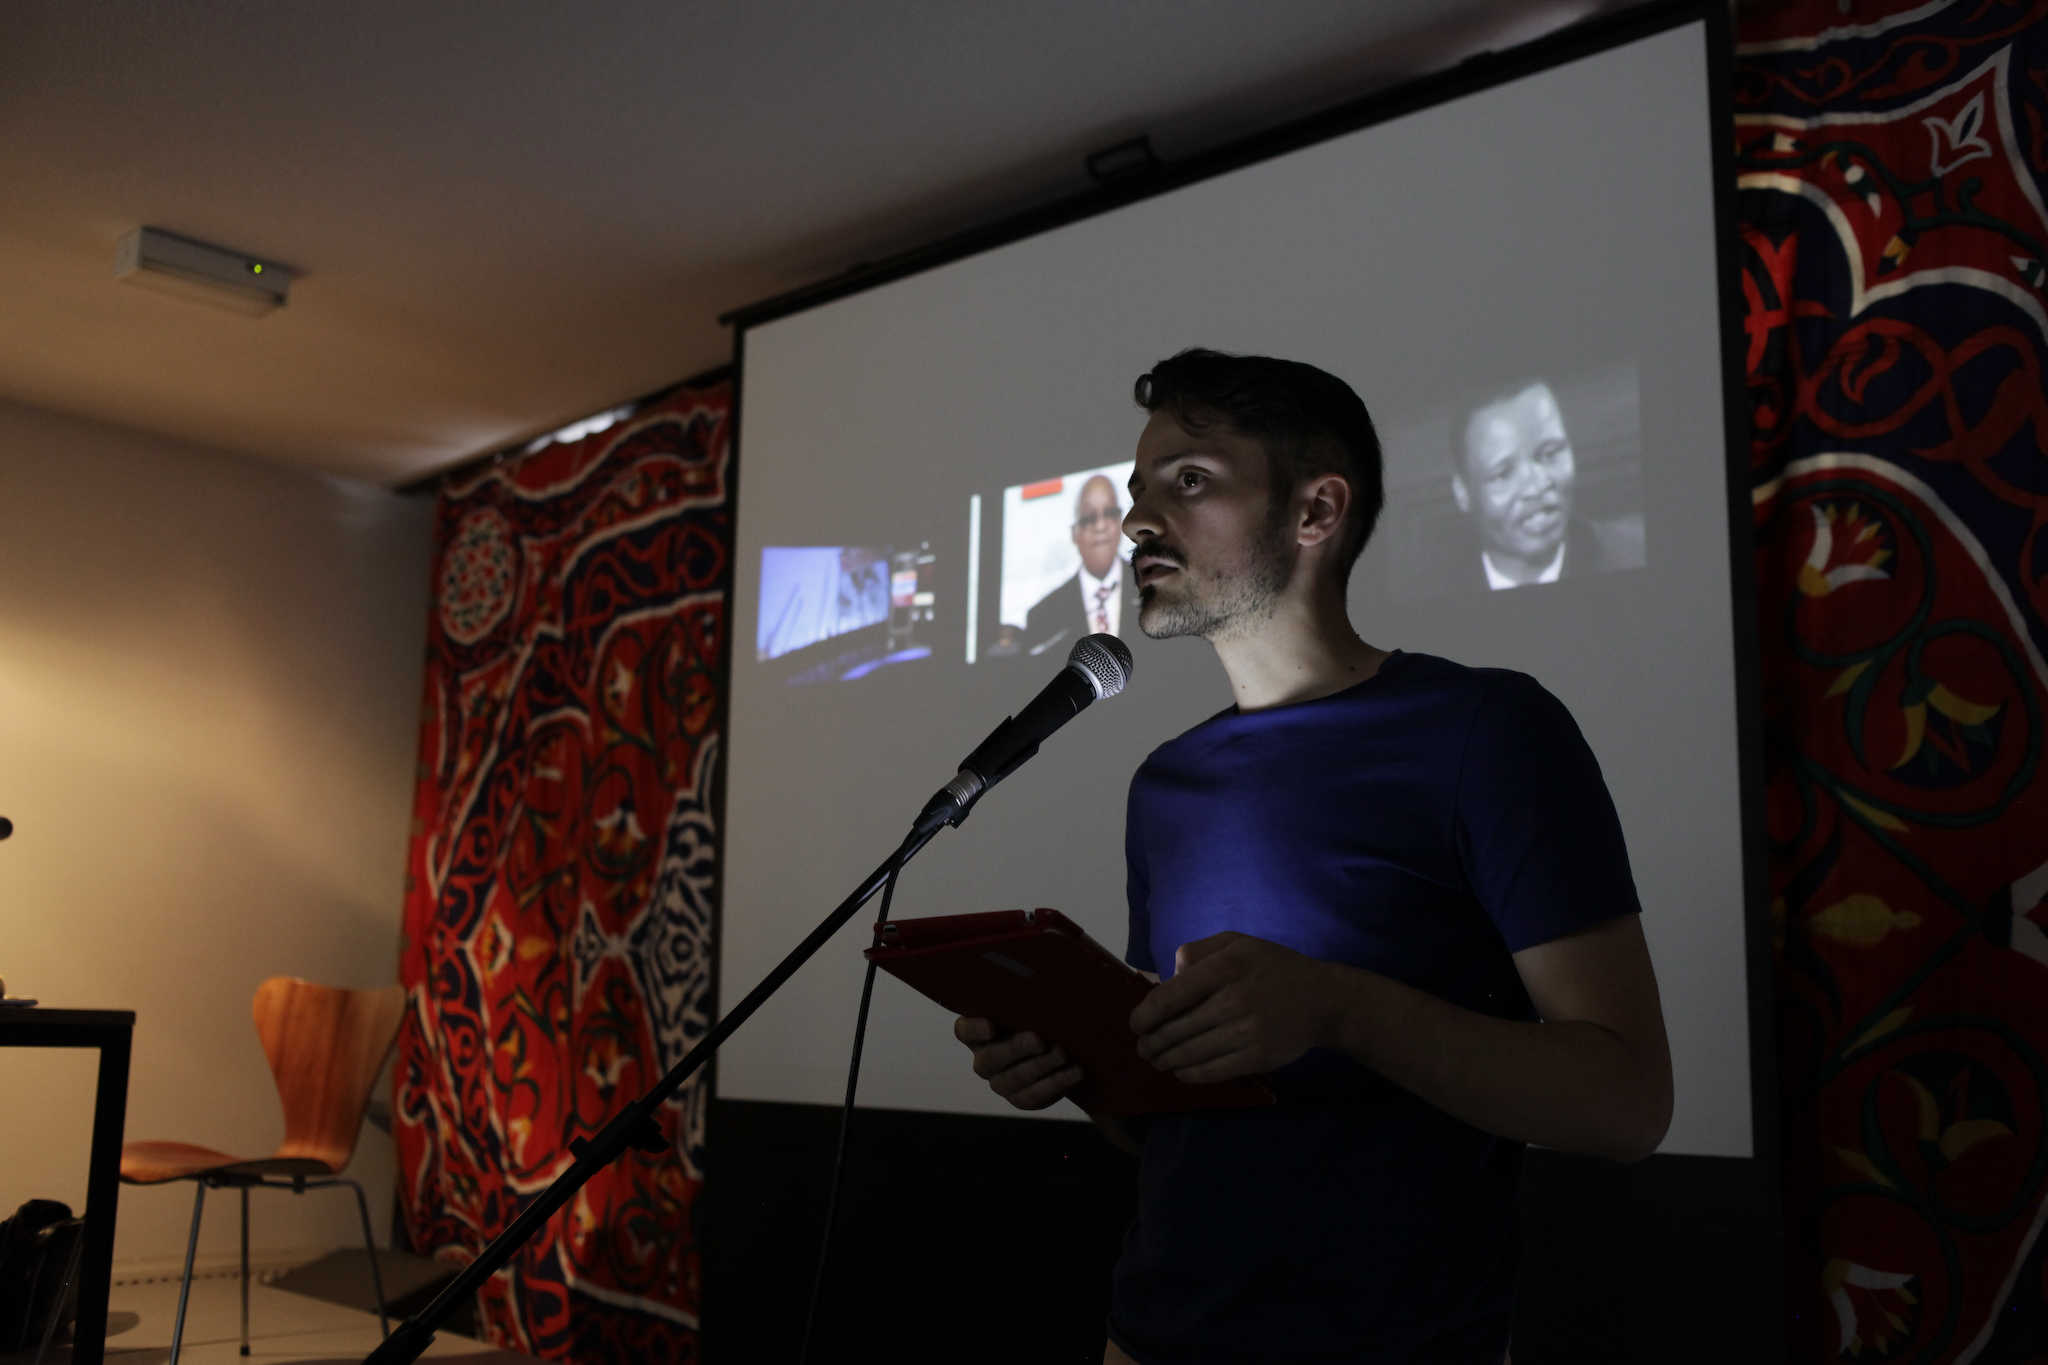 Eduardo Cachucho presenting Flatland at the Dutch Art Institute, June 2014